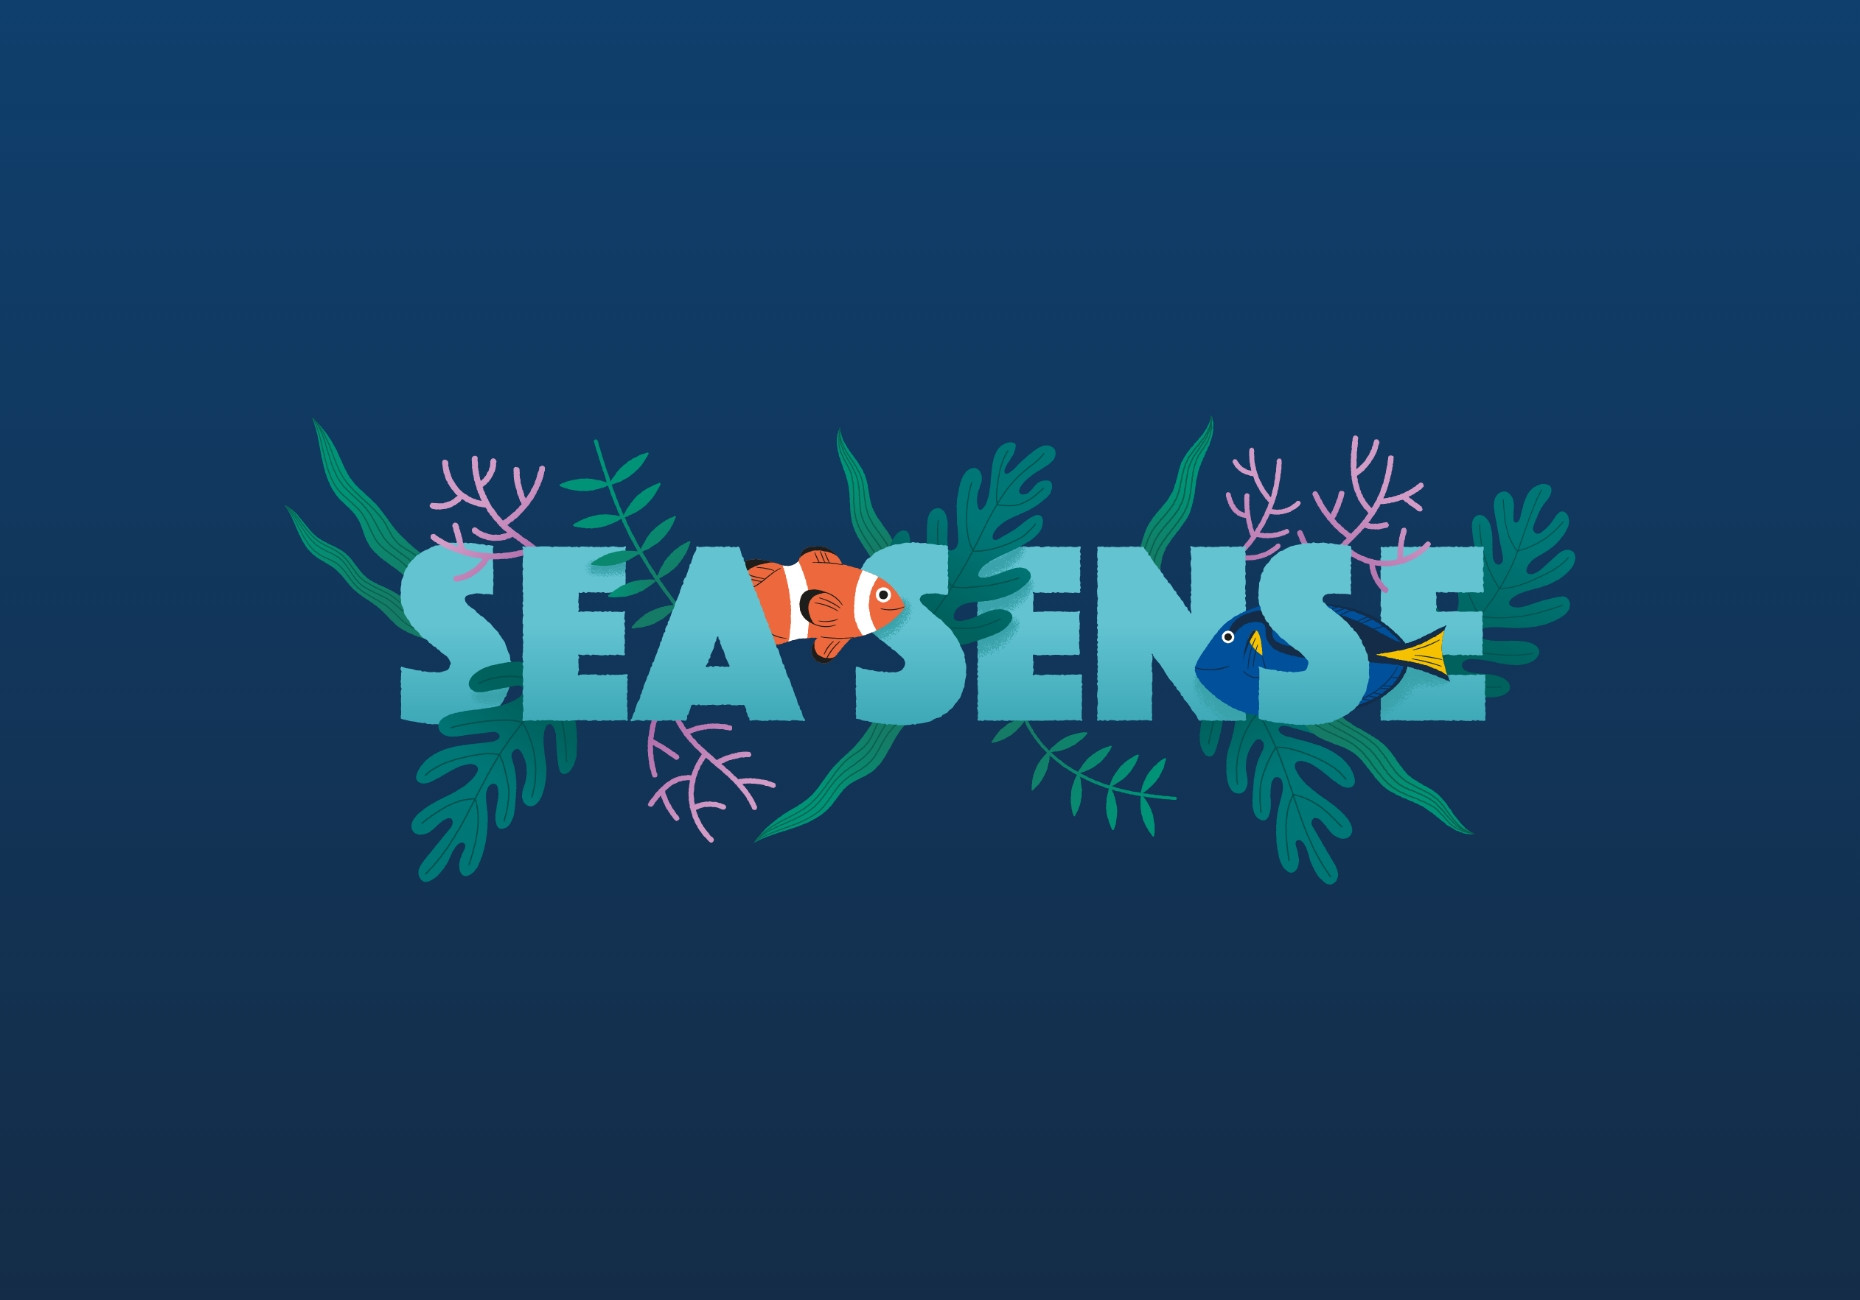 Concrete Youth charity Sea Sense branding design by Root Studio